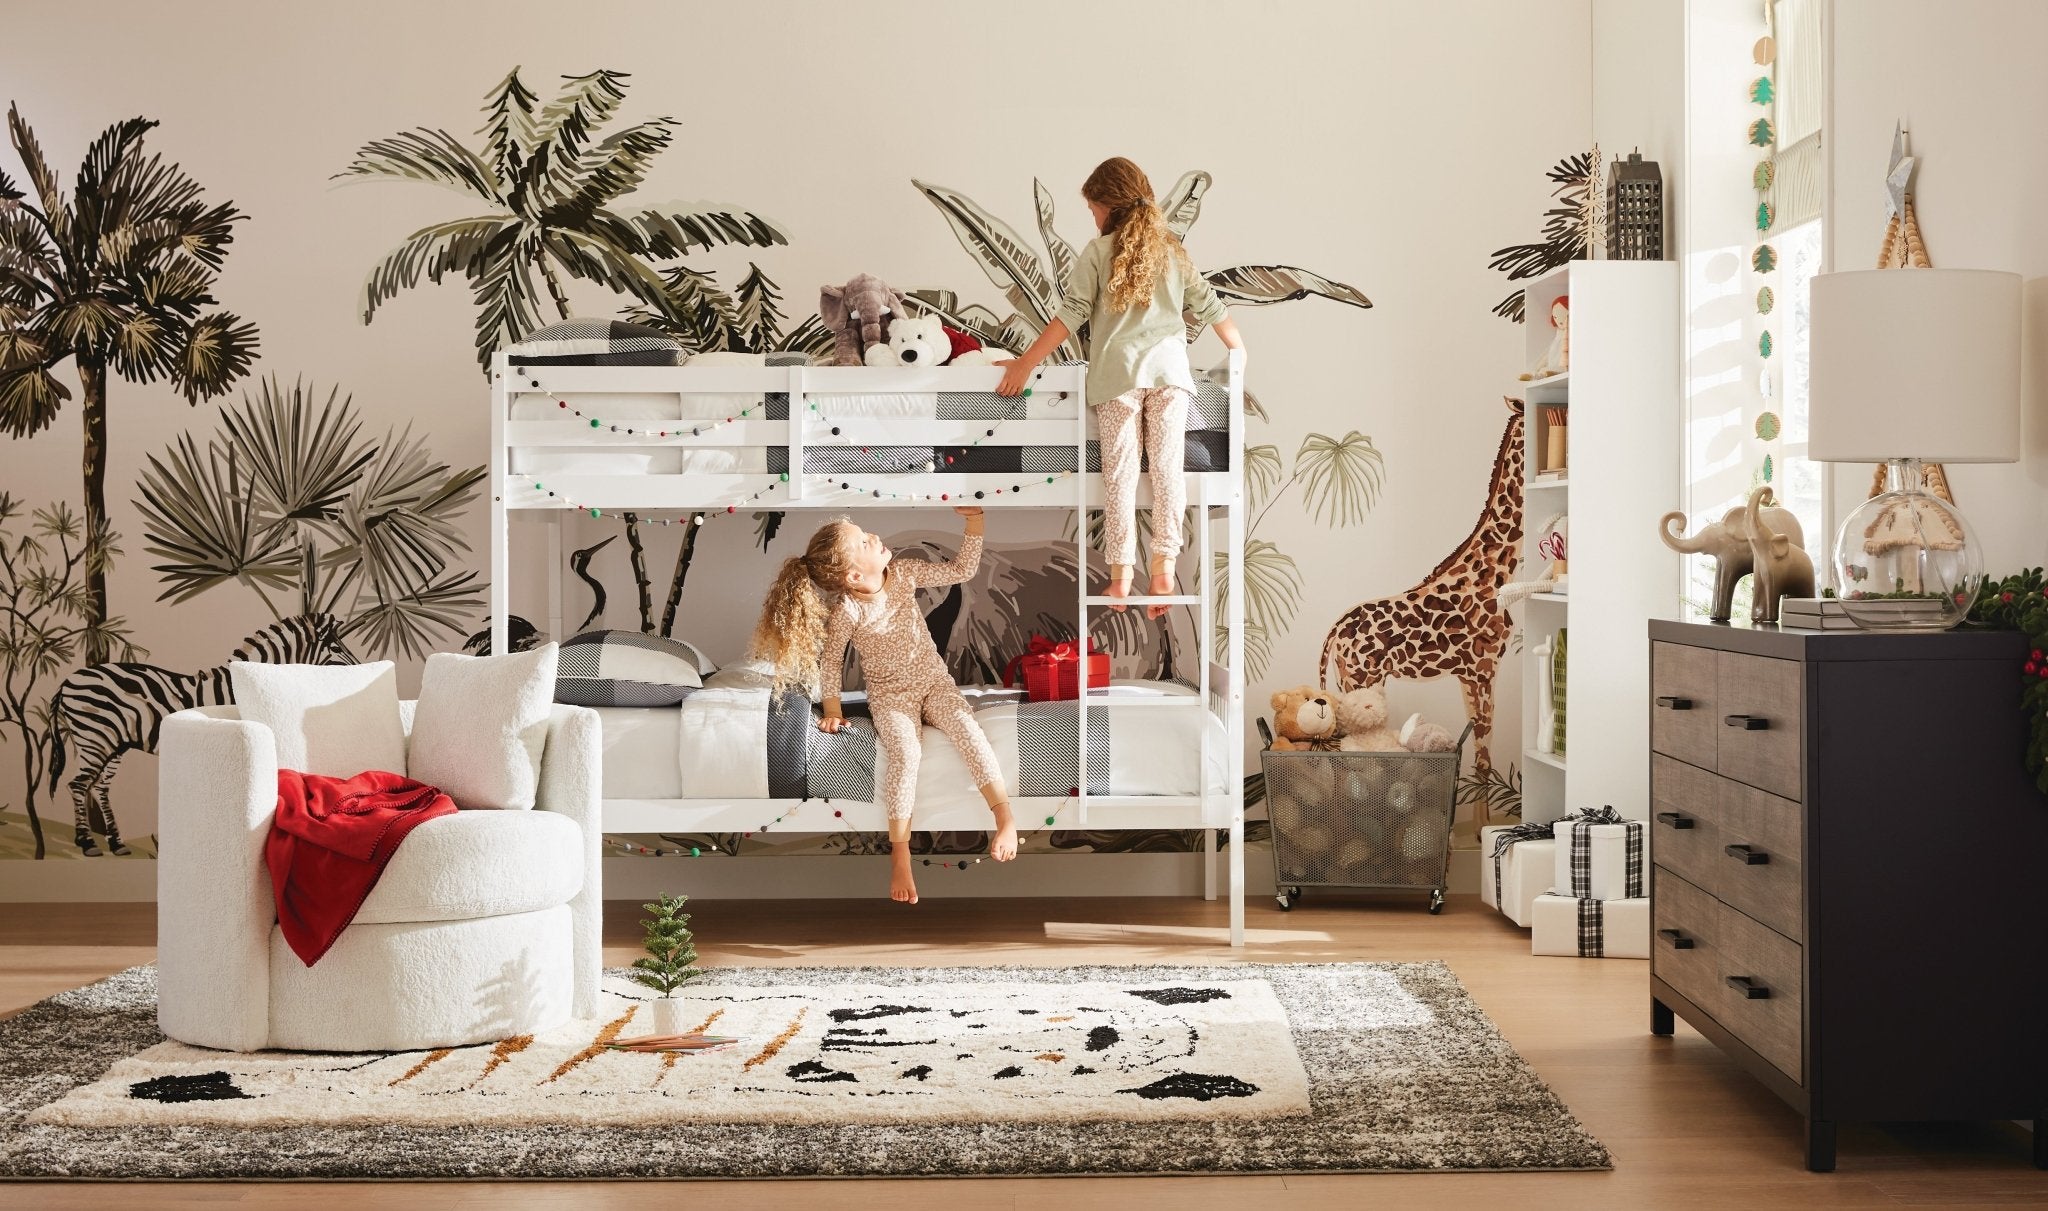 Safari Animal zebra, giraffe, elephant wall decor in a room with white bunk beds